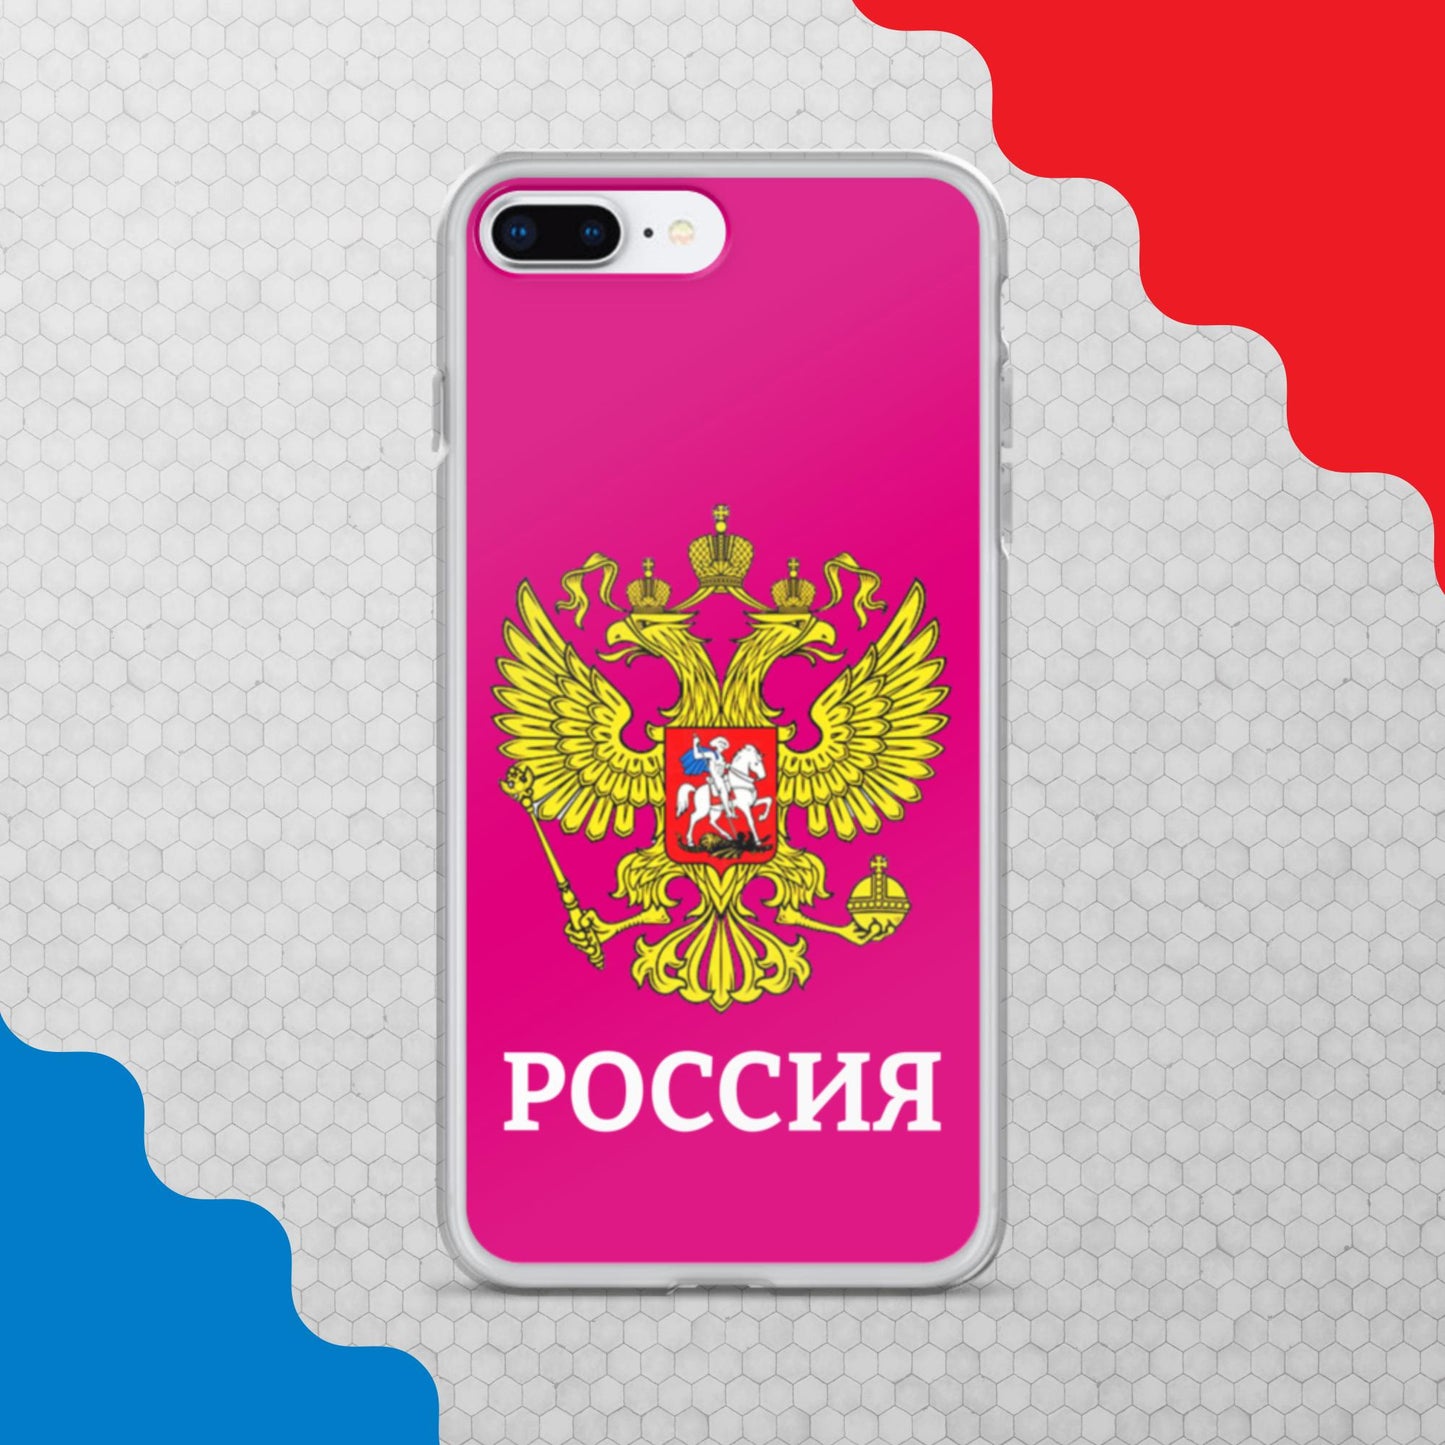 iPhone-Hülle mit Russland-Wappen in lila (alle Modelle)